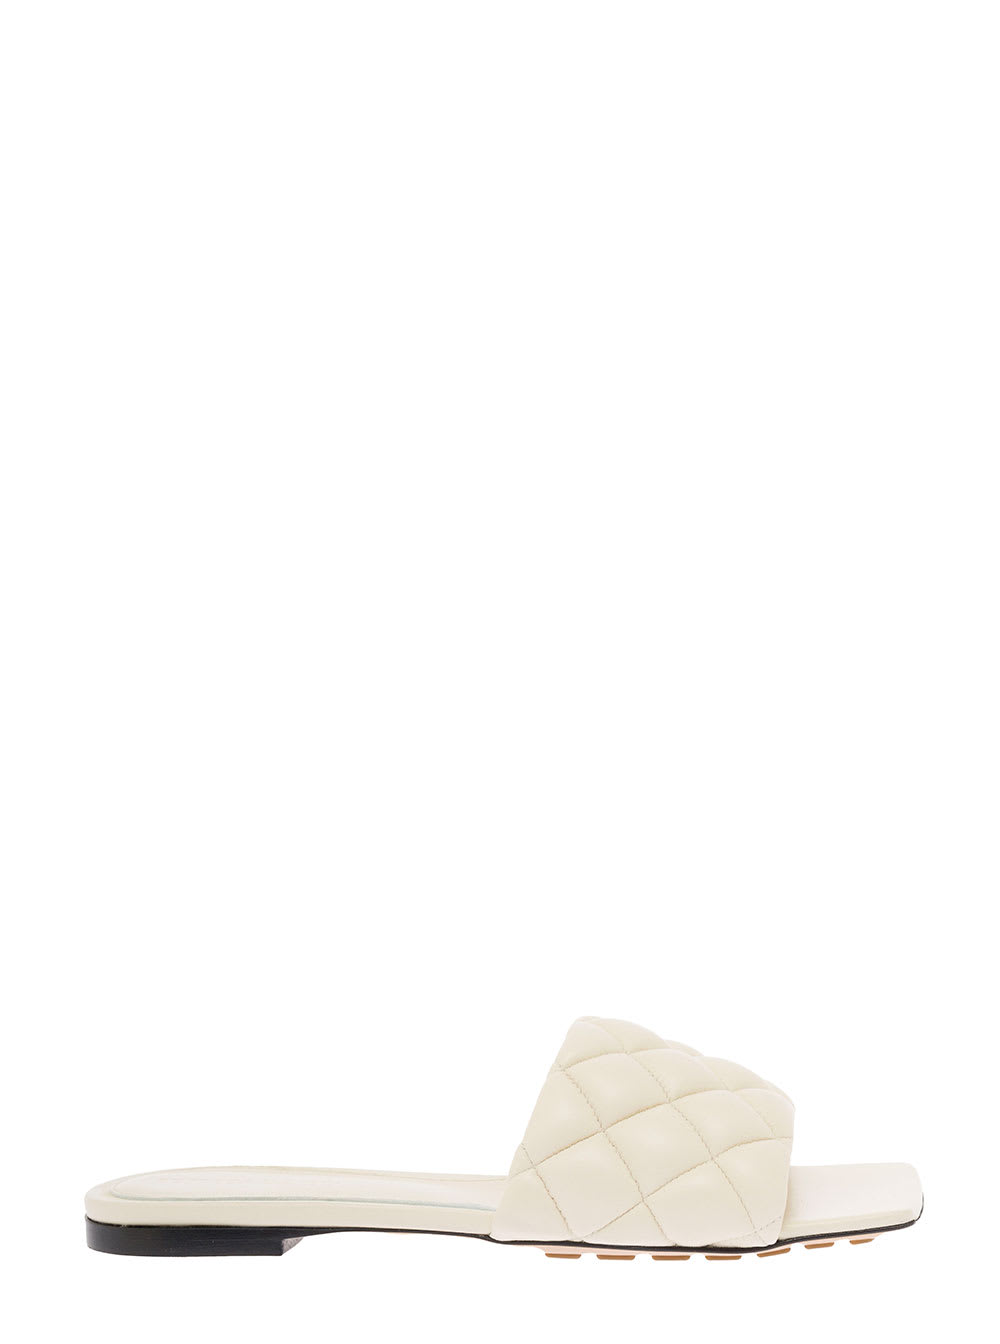 Bottega Veneta Womans White Quilted Leather Slide Sandals